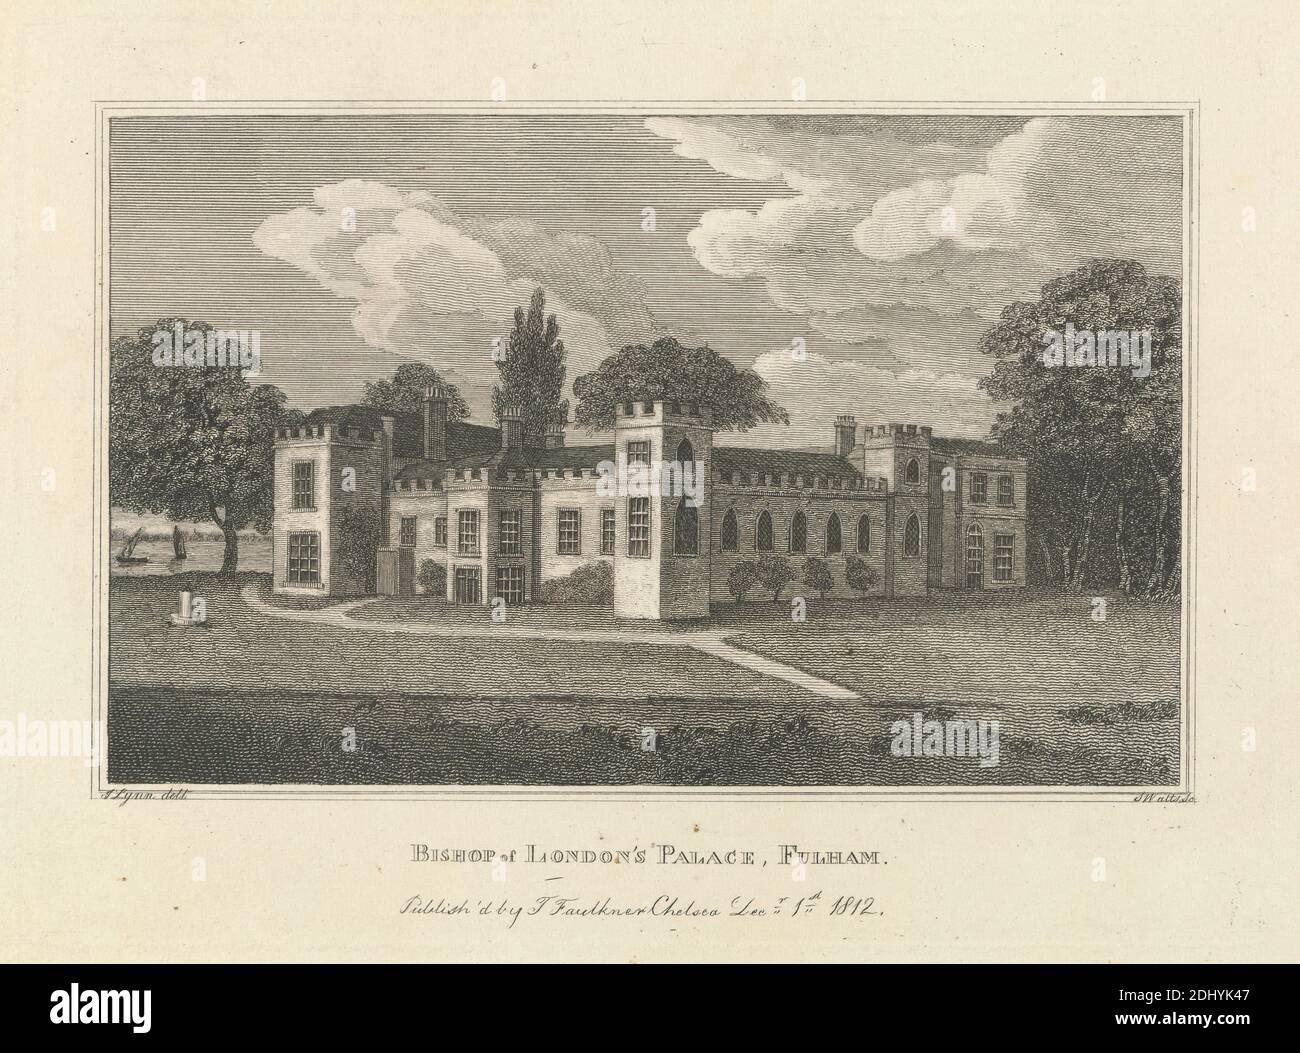 Bishop of London's Palace, Fulham, Simon Watts, active 1812, after John Lynn, 1826–1838, British, 1812, Engraving Stock Photo